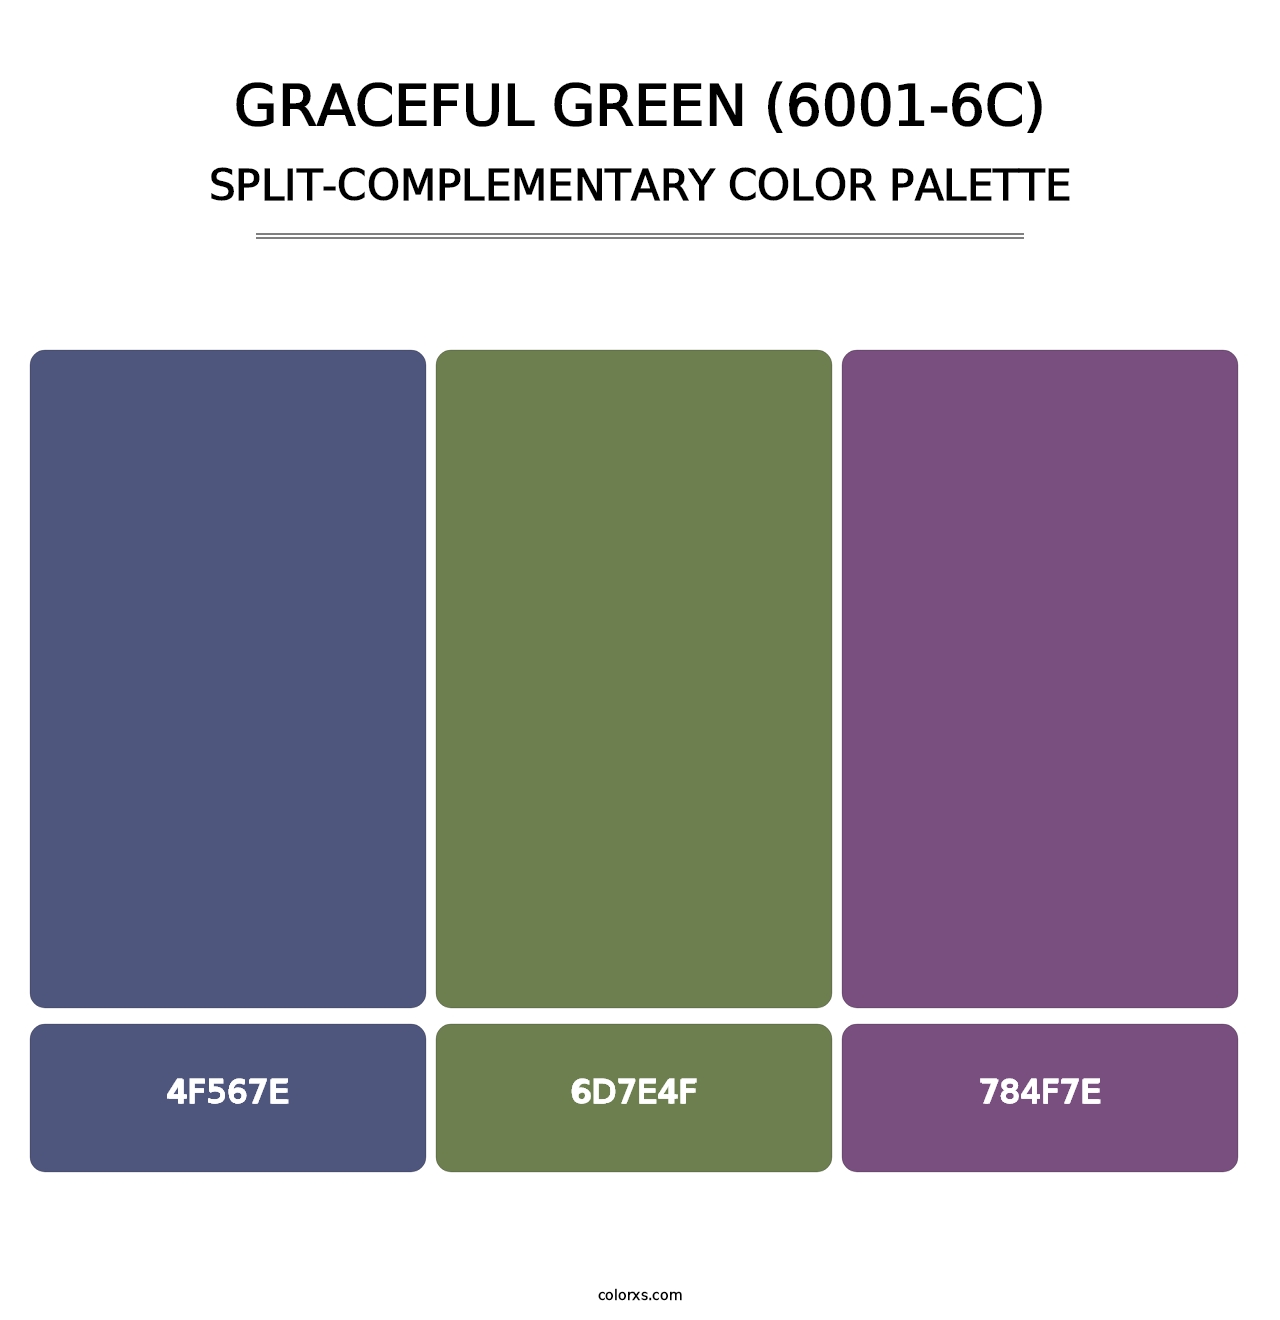 Graceful Green (6001-6C) - Split-Complementary Color Palette